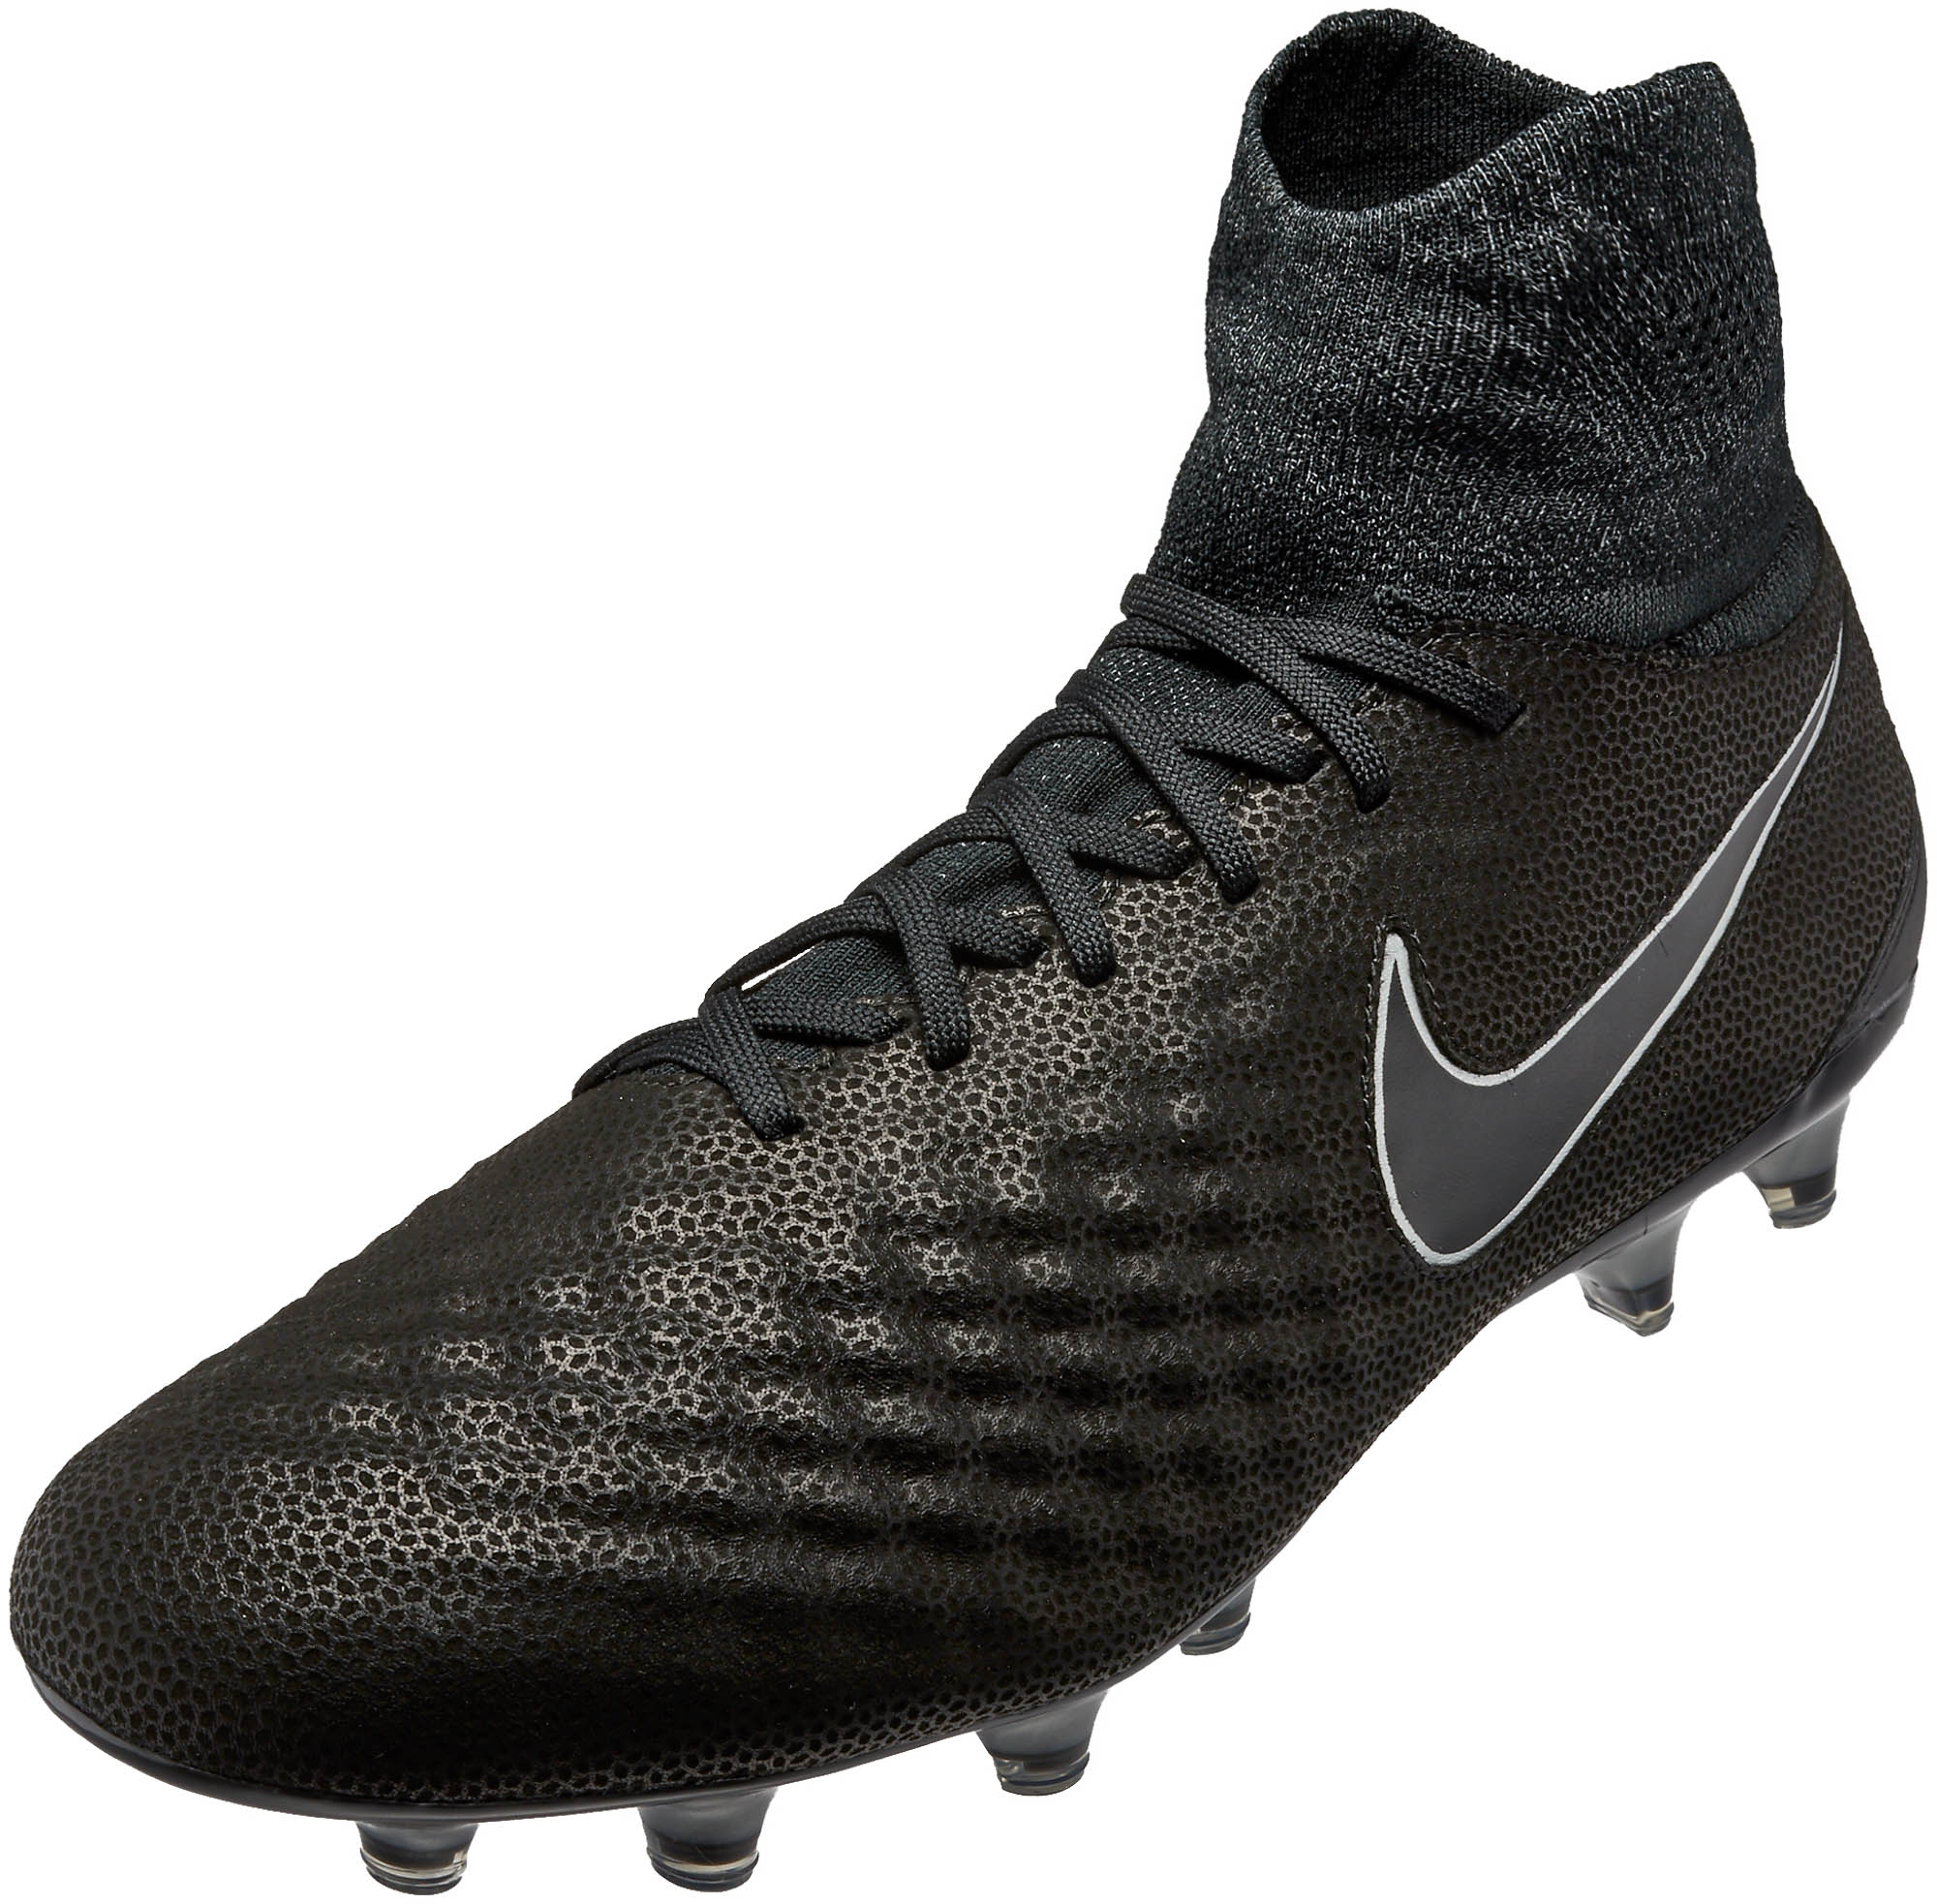 Nike Hypervenom Phantom III Football Boots